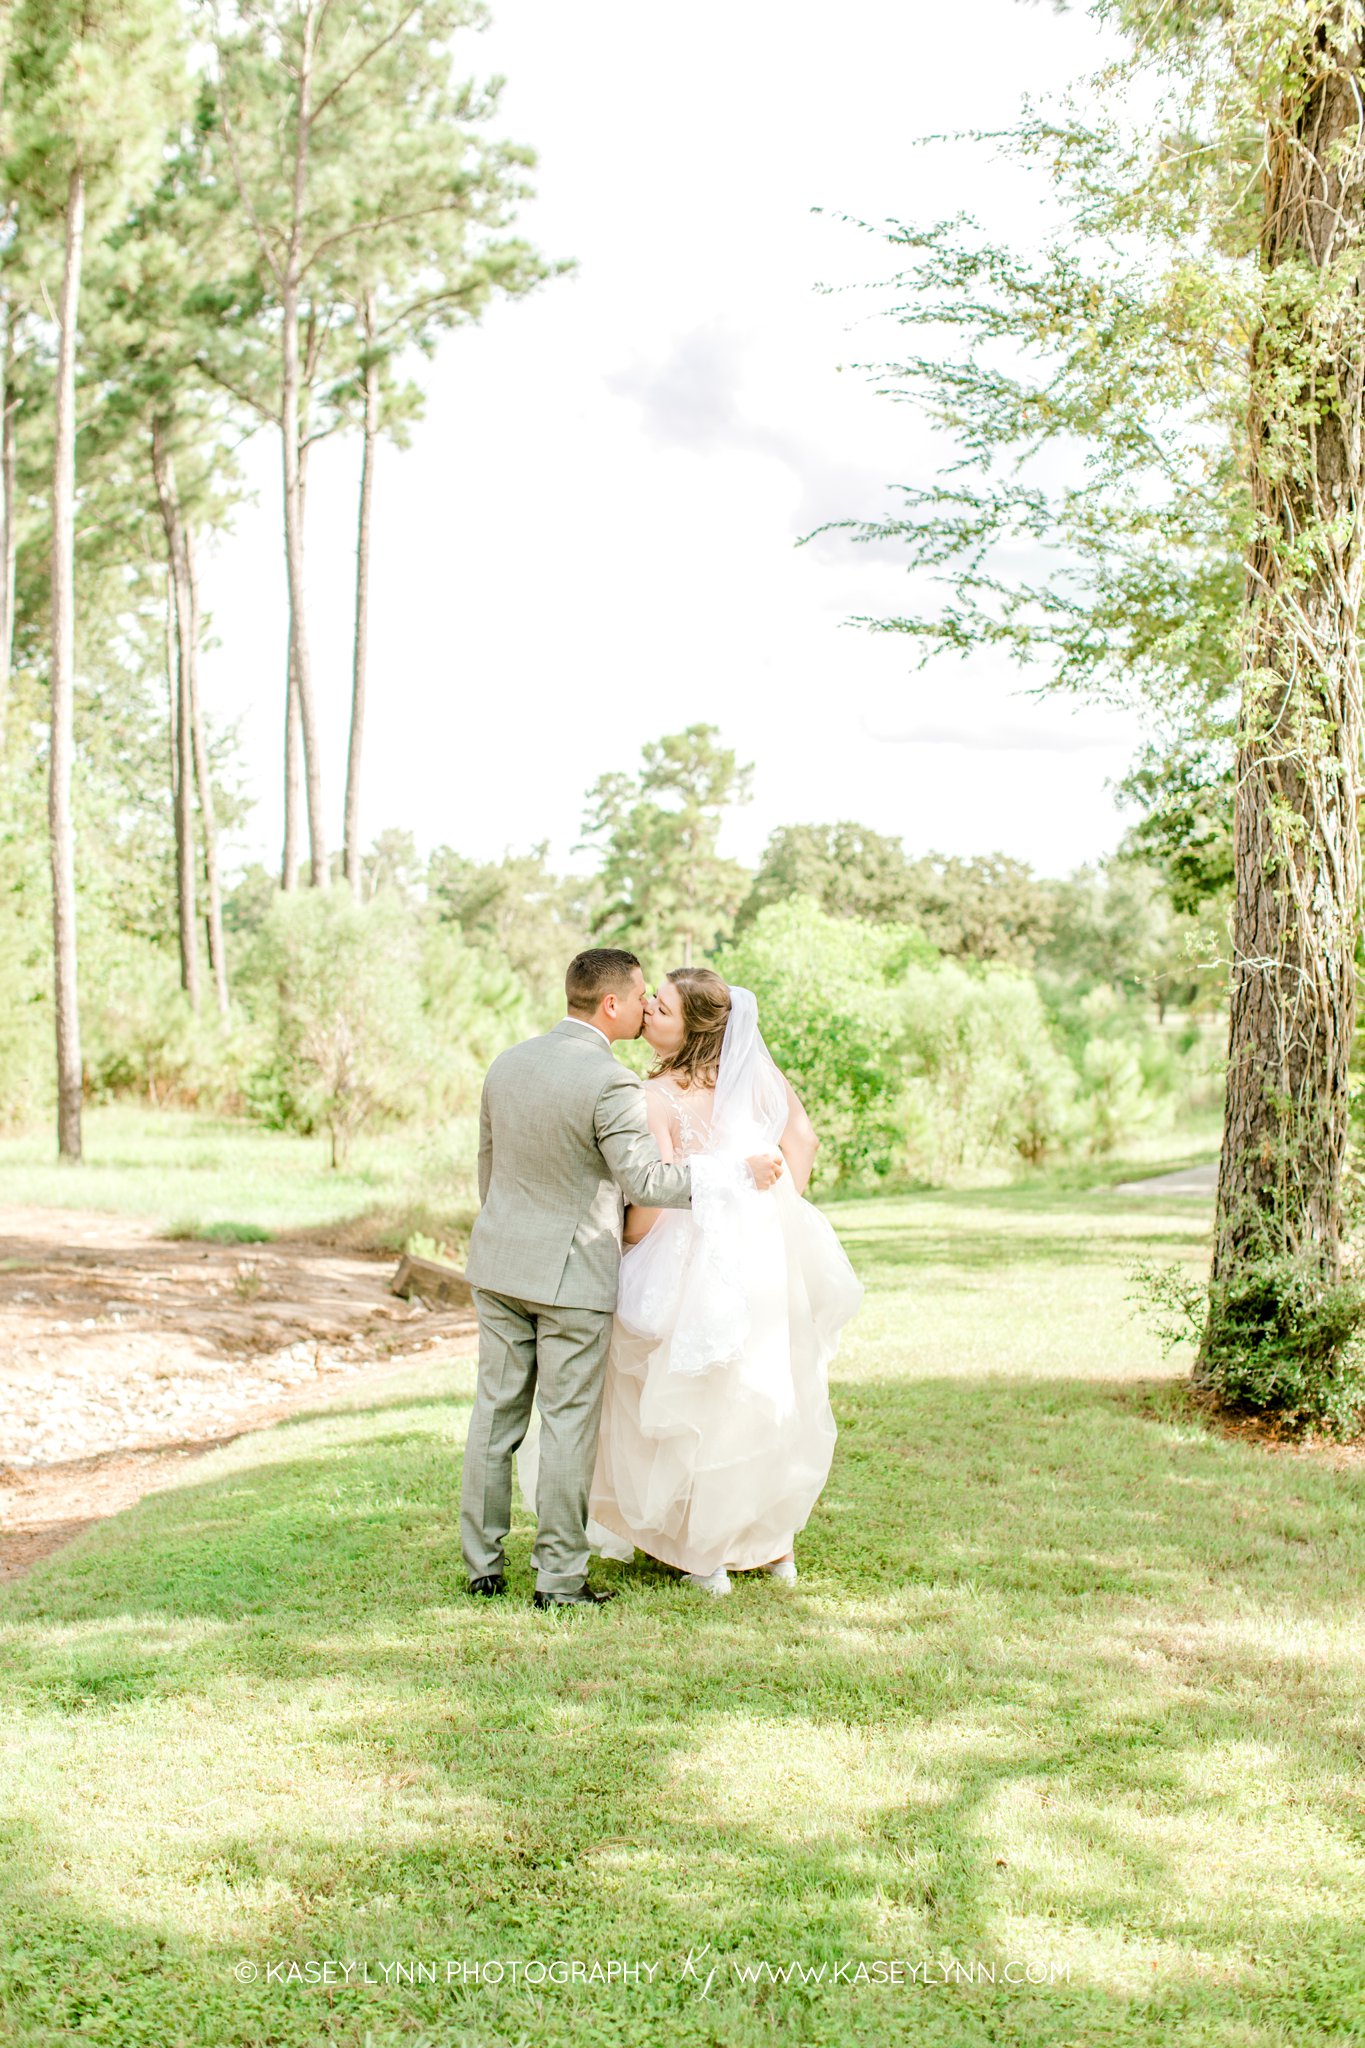 Magnolia Wedding photographer / Kasey Lynn Photography